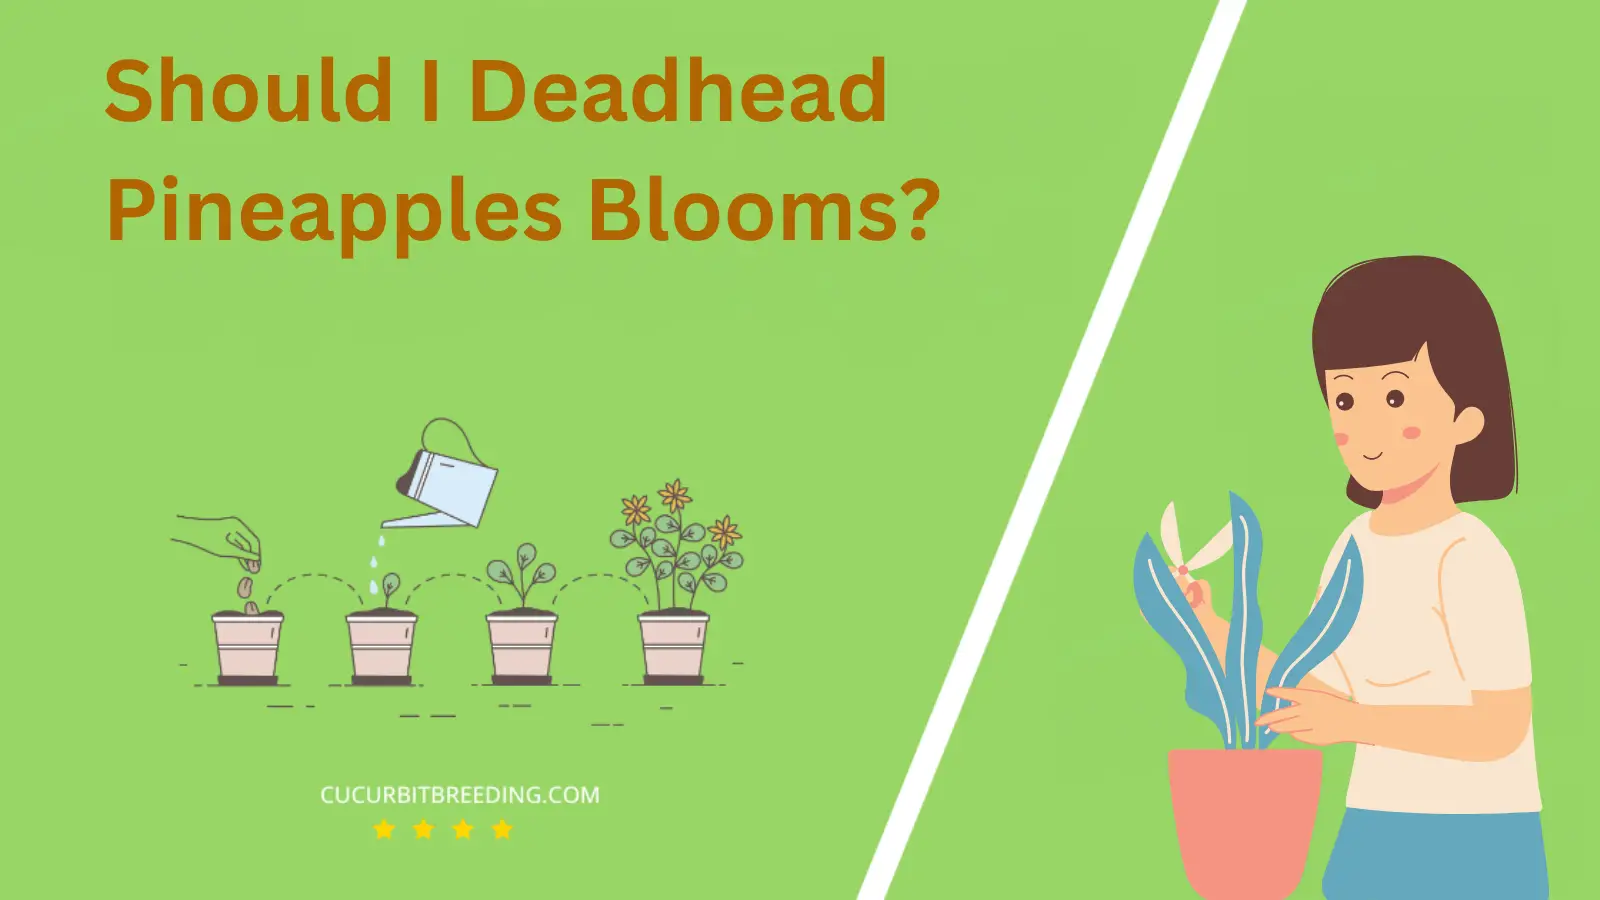 Should I Deadhead Pineapples Blooms?